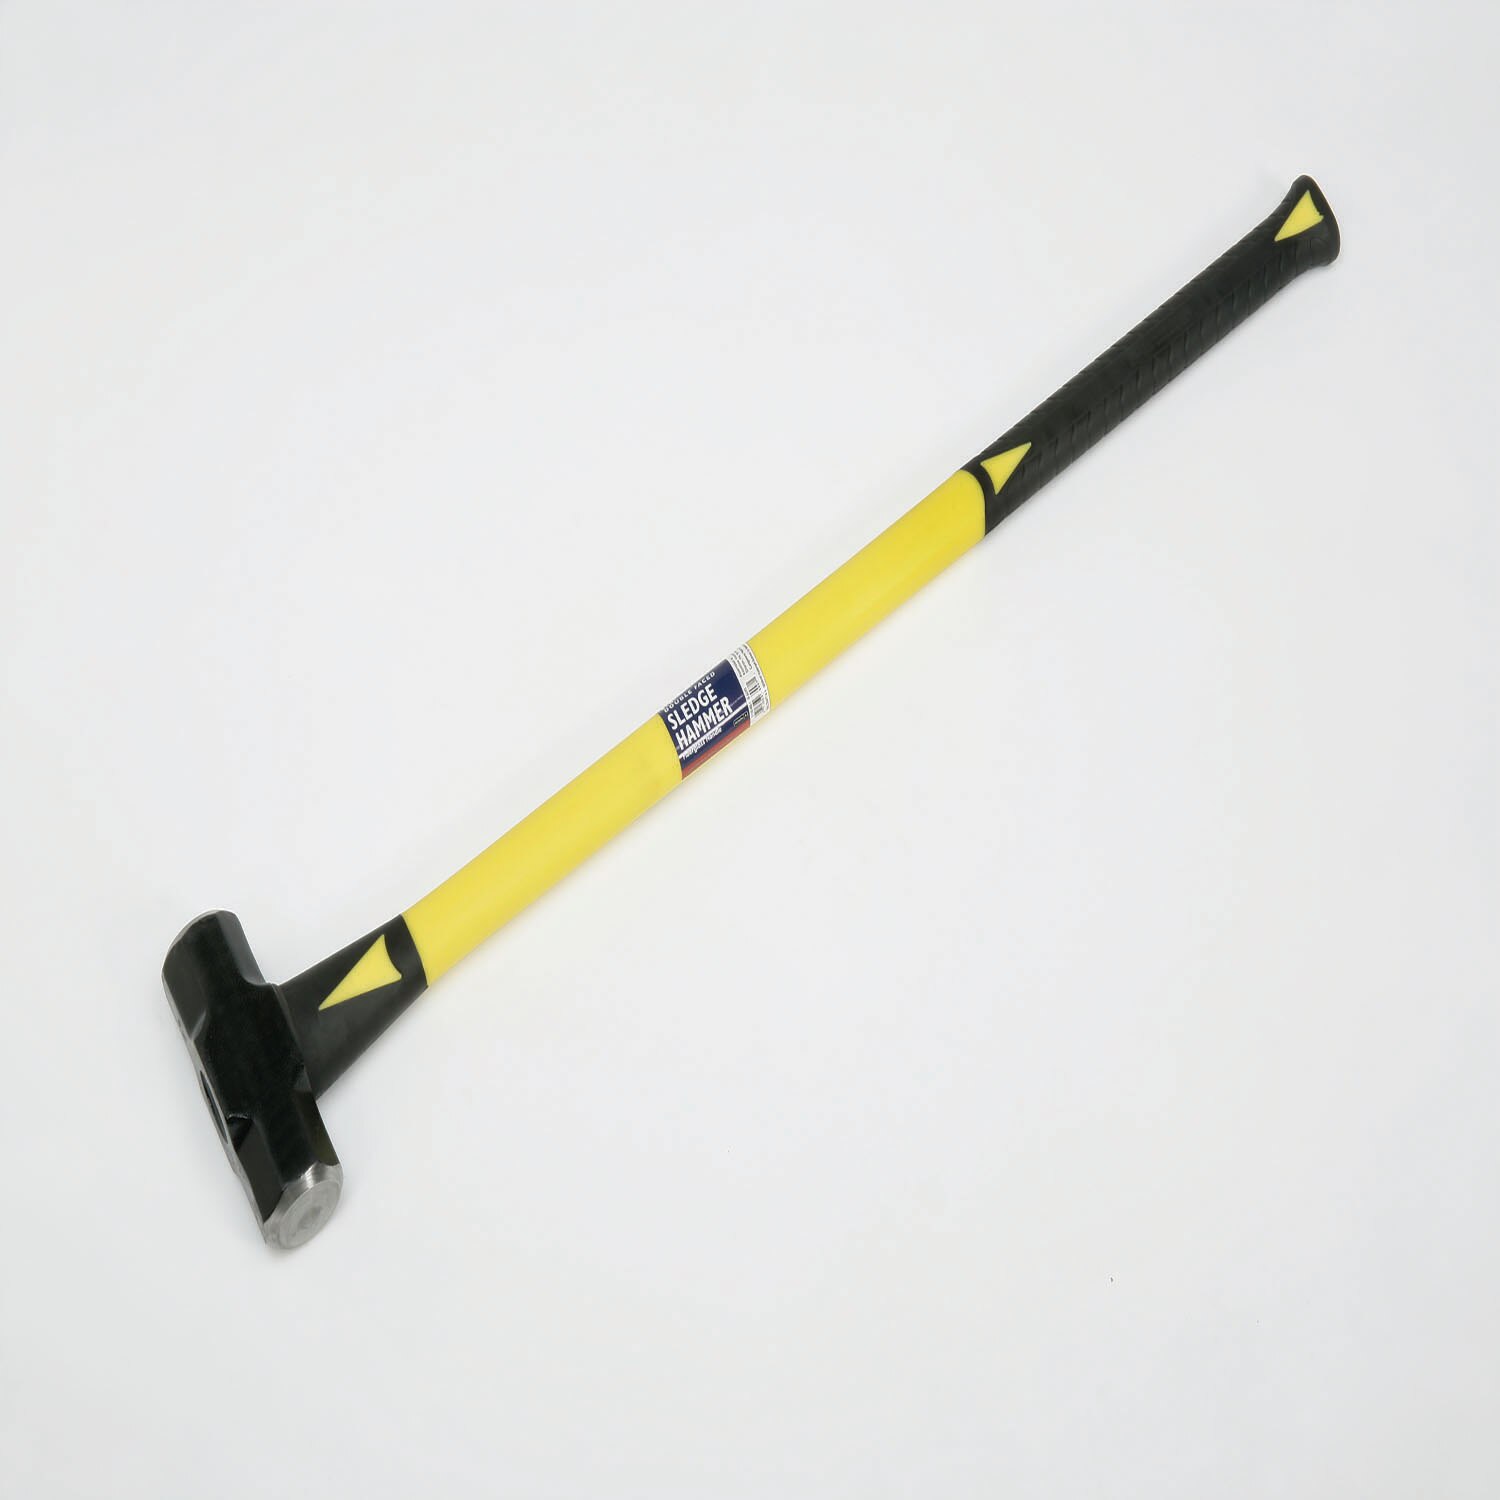 Hammer - 6 lb, Sledge, Double-Faced, 32" Fiberglass Handle, Cushioned Grip